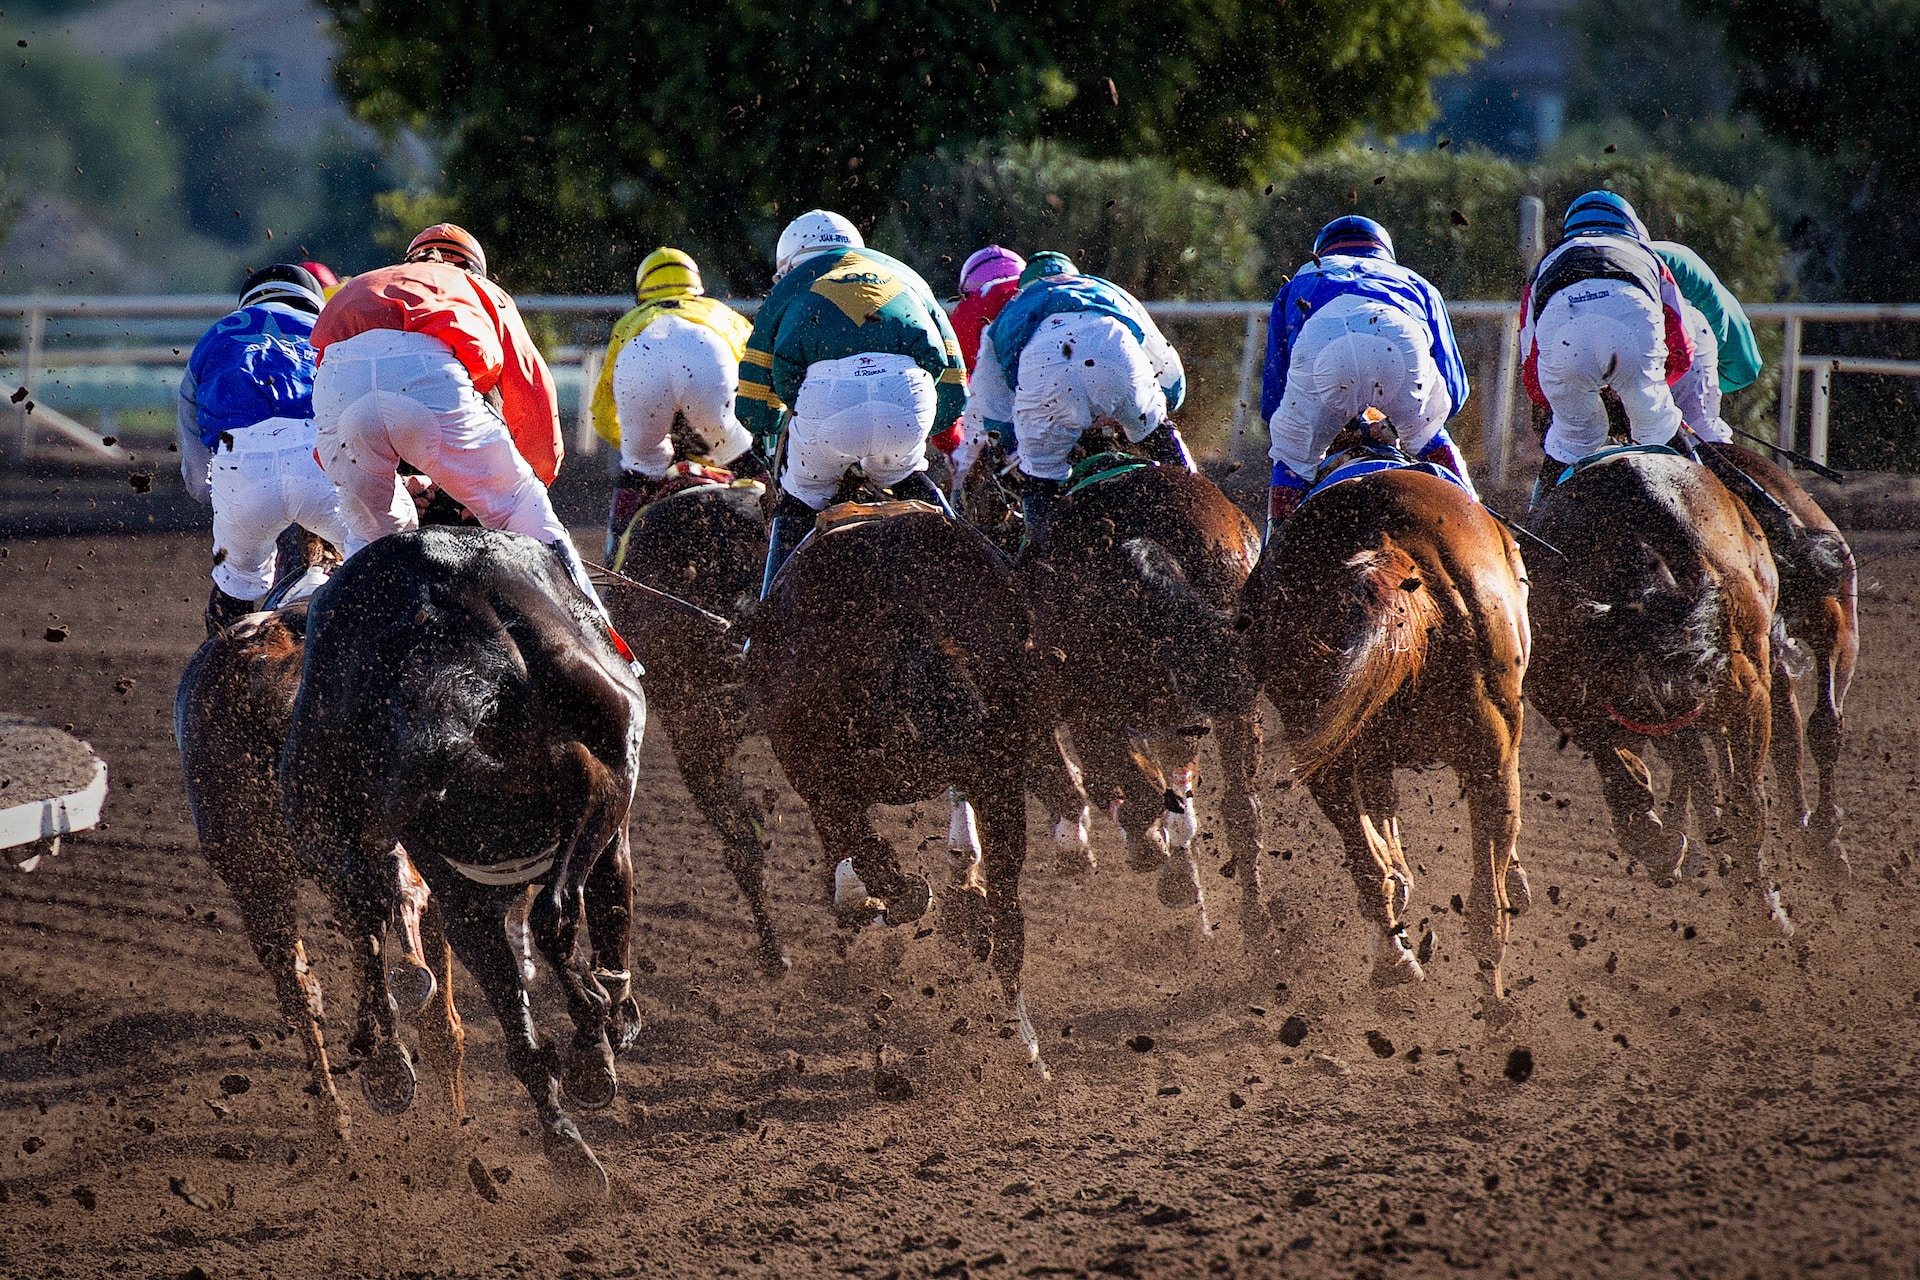 Jockeys racing by on some horses.